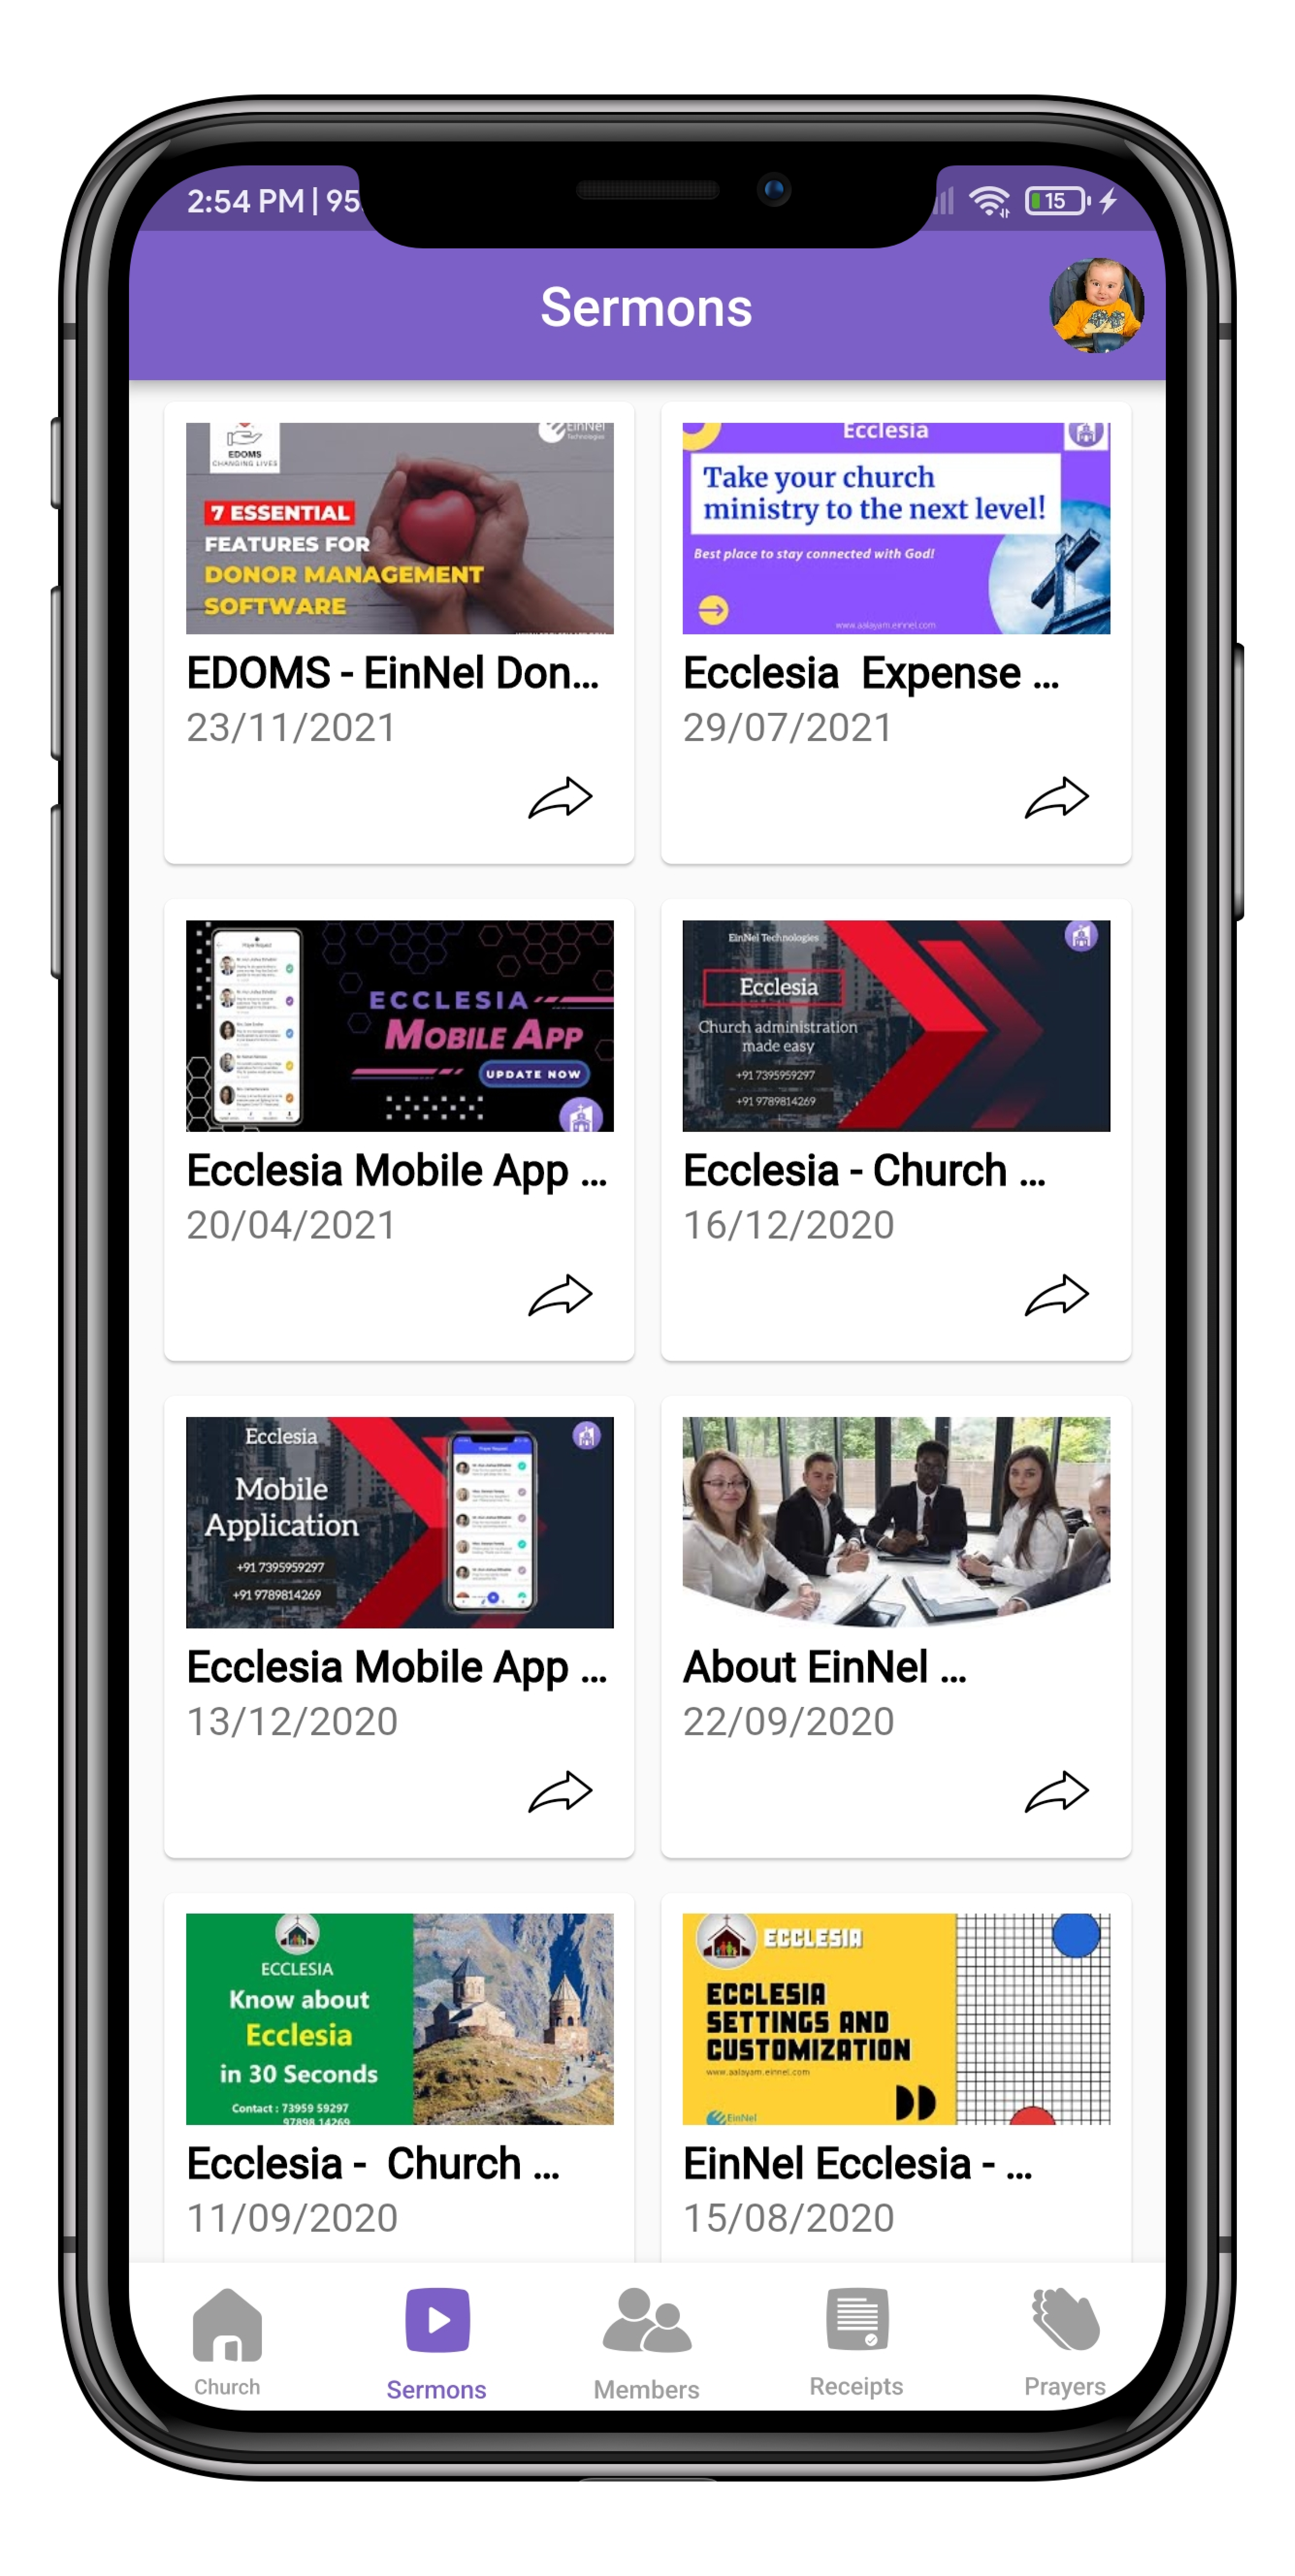 Watch pastor's YouTube sermons through mobile app